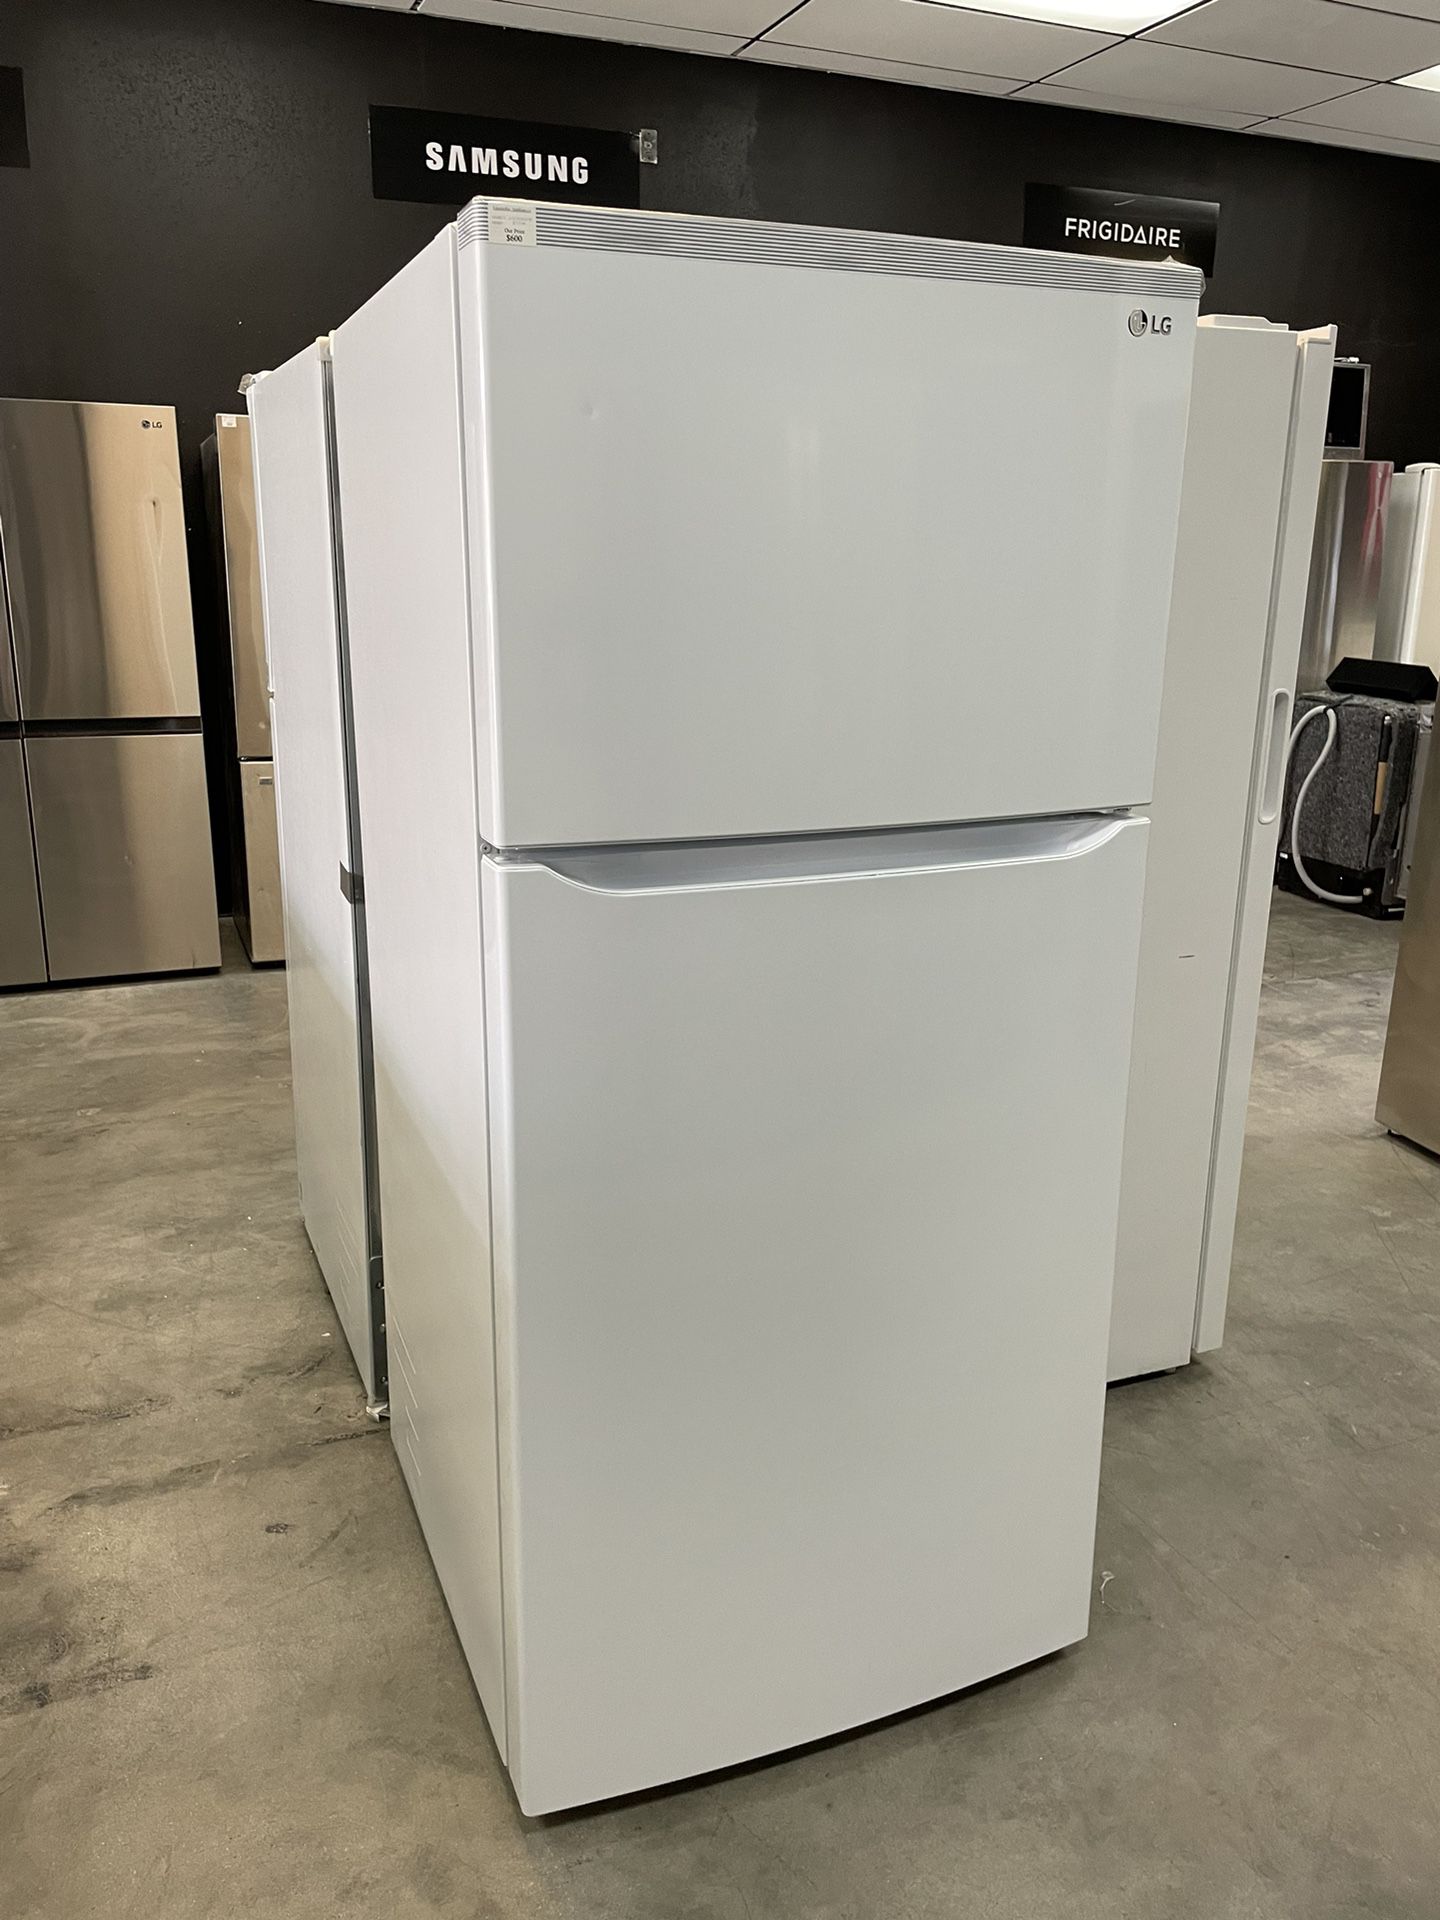 LG 30” Top Freezer Refrigerator - White 